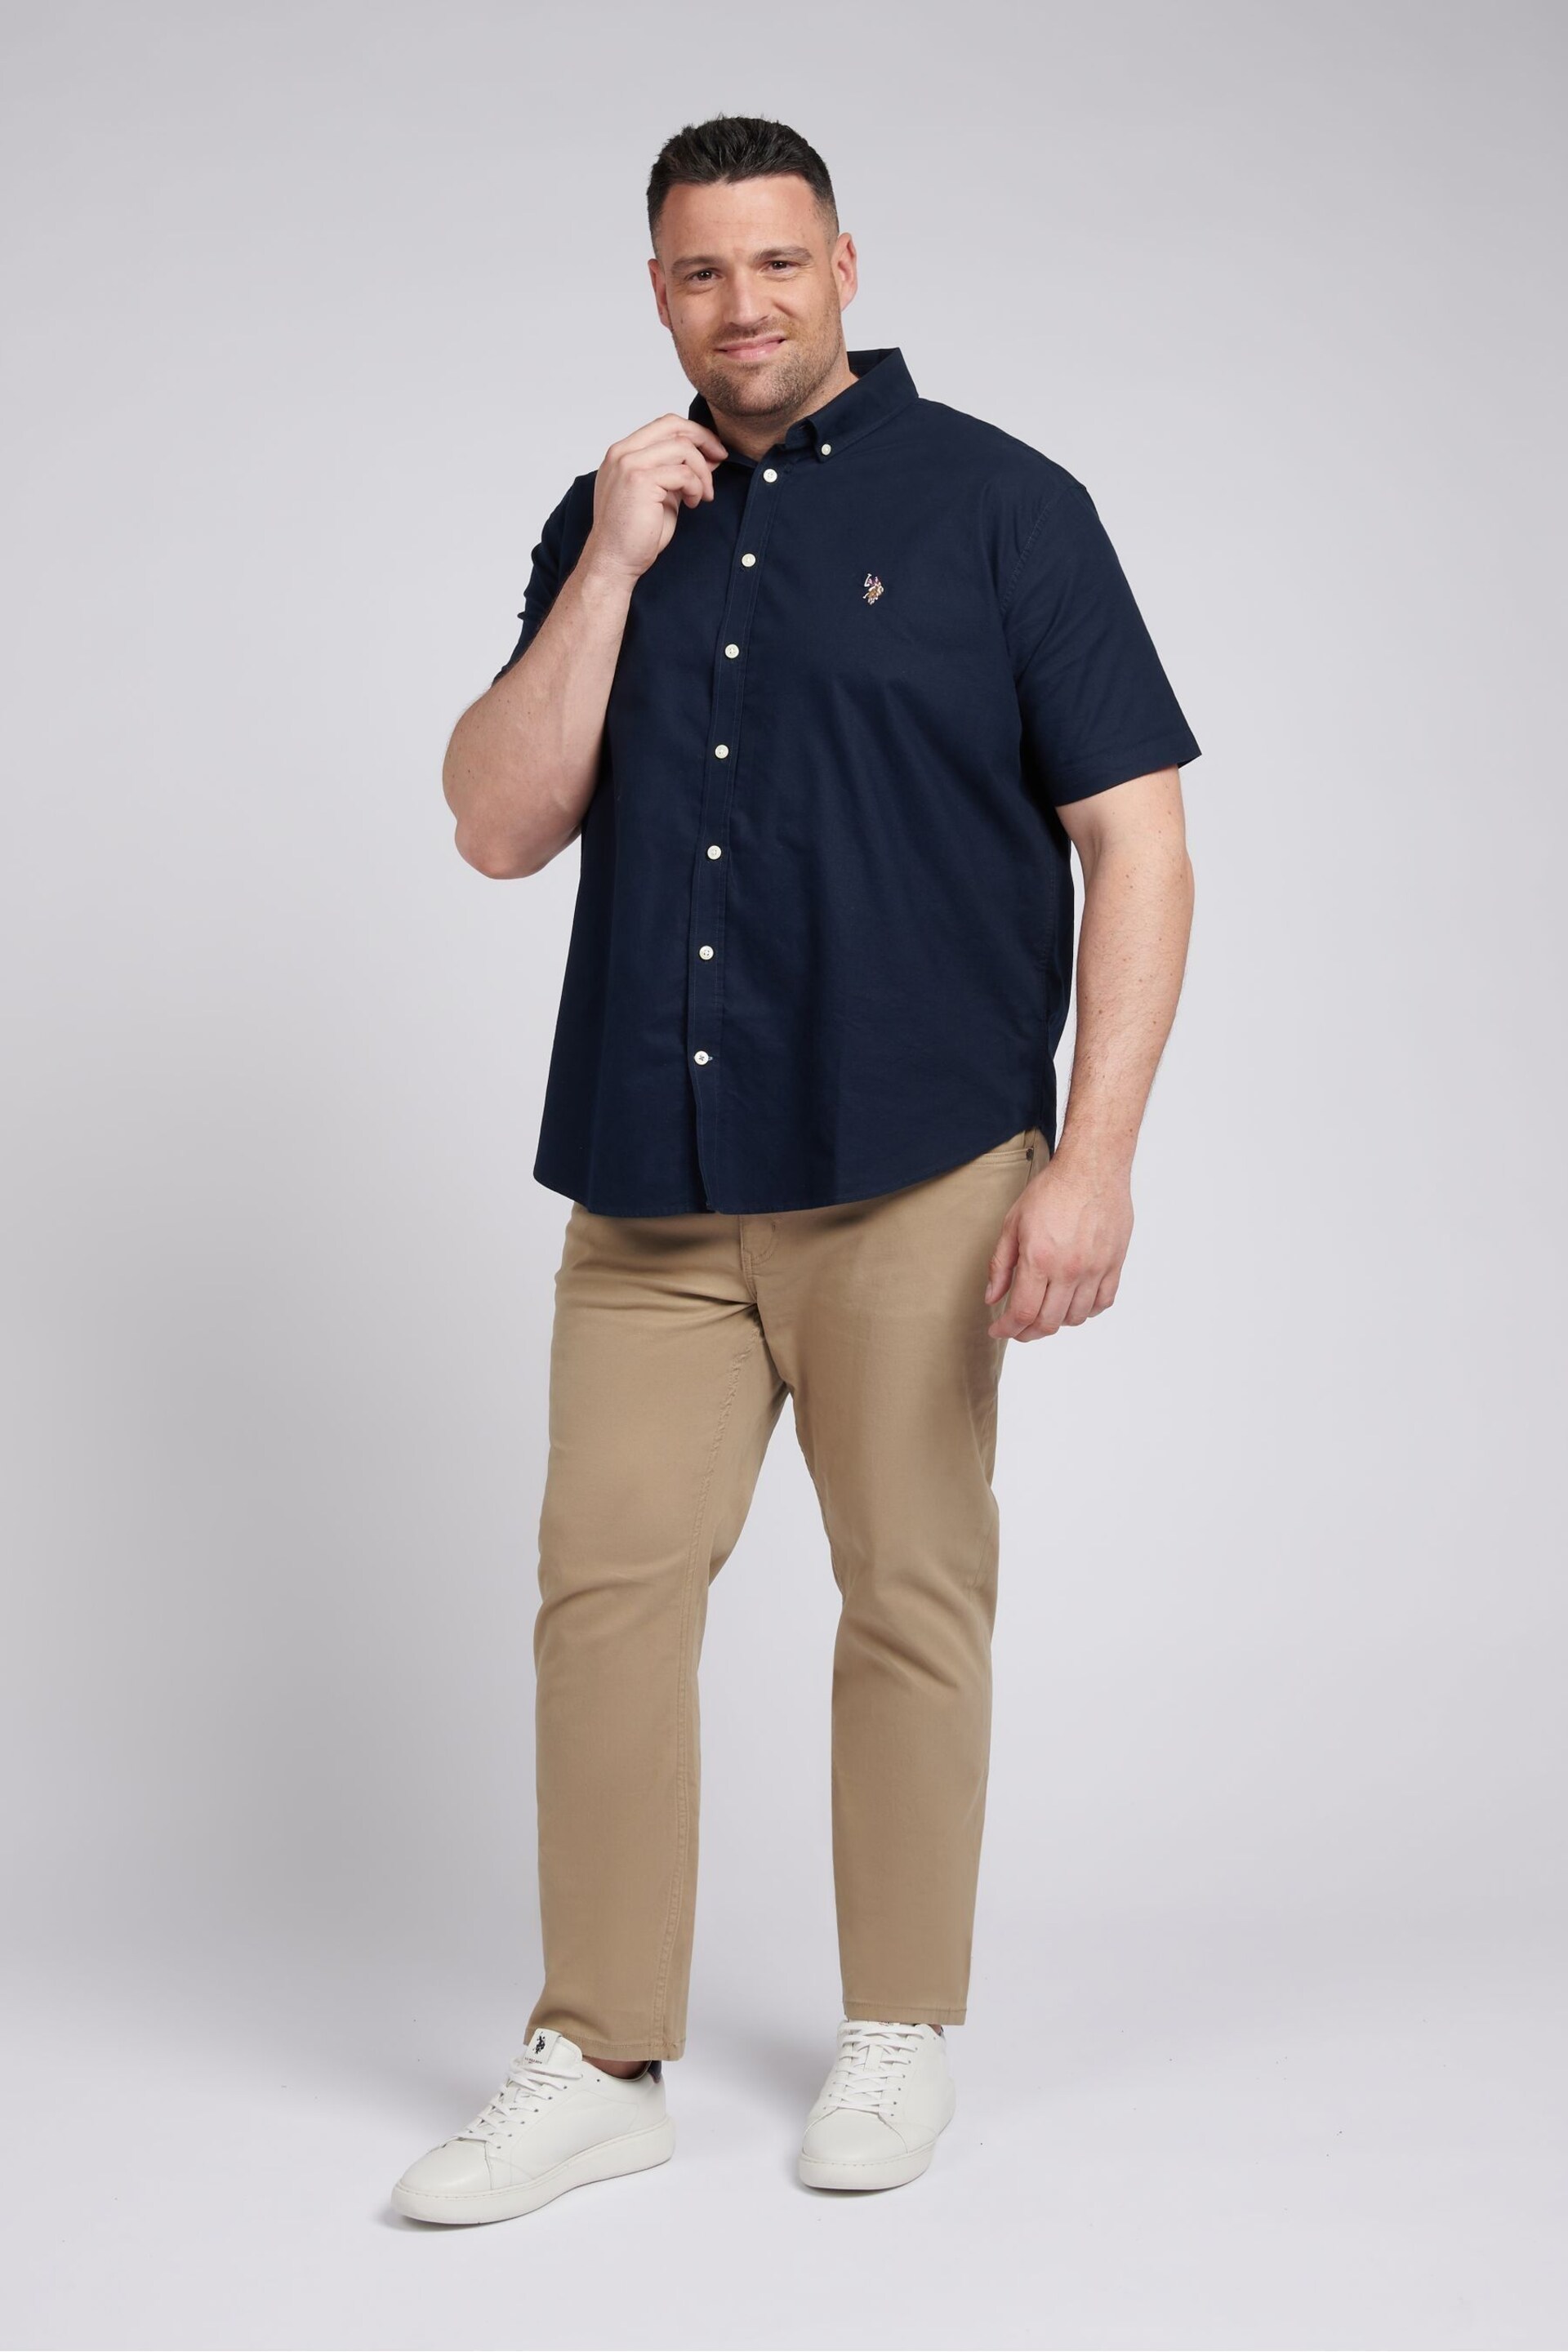 U.S. Polo Assn. Mens Blue Big & Tall Short Sleeve Oxford Shirt - Image 3 of 7